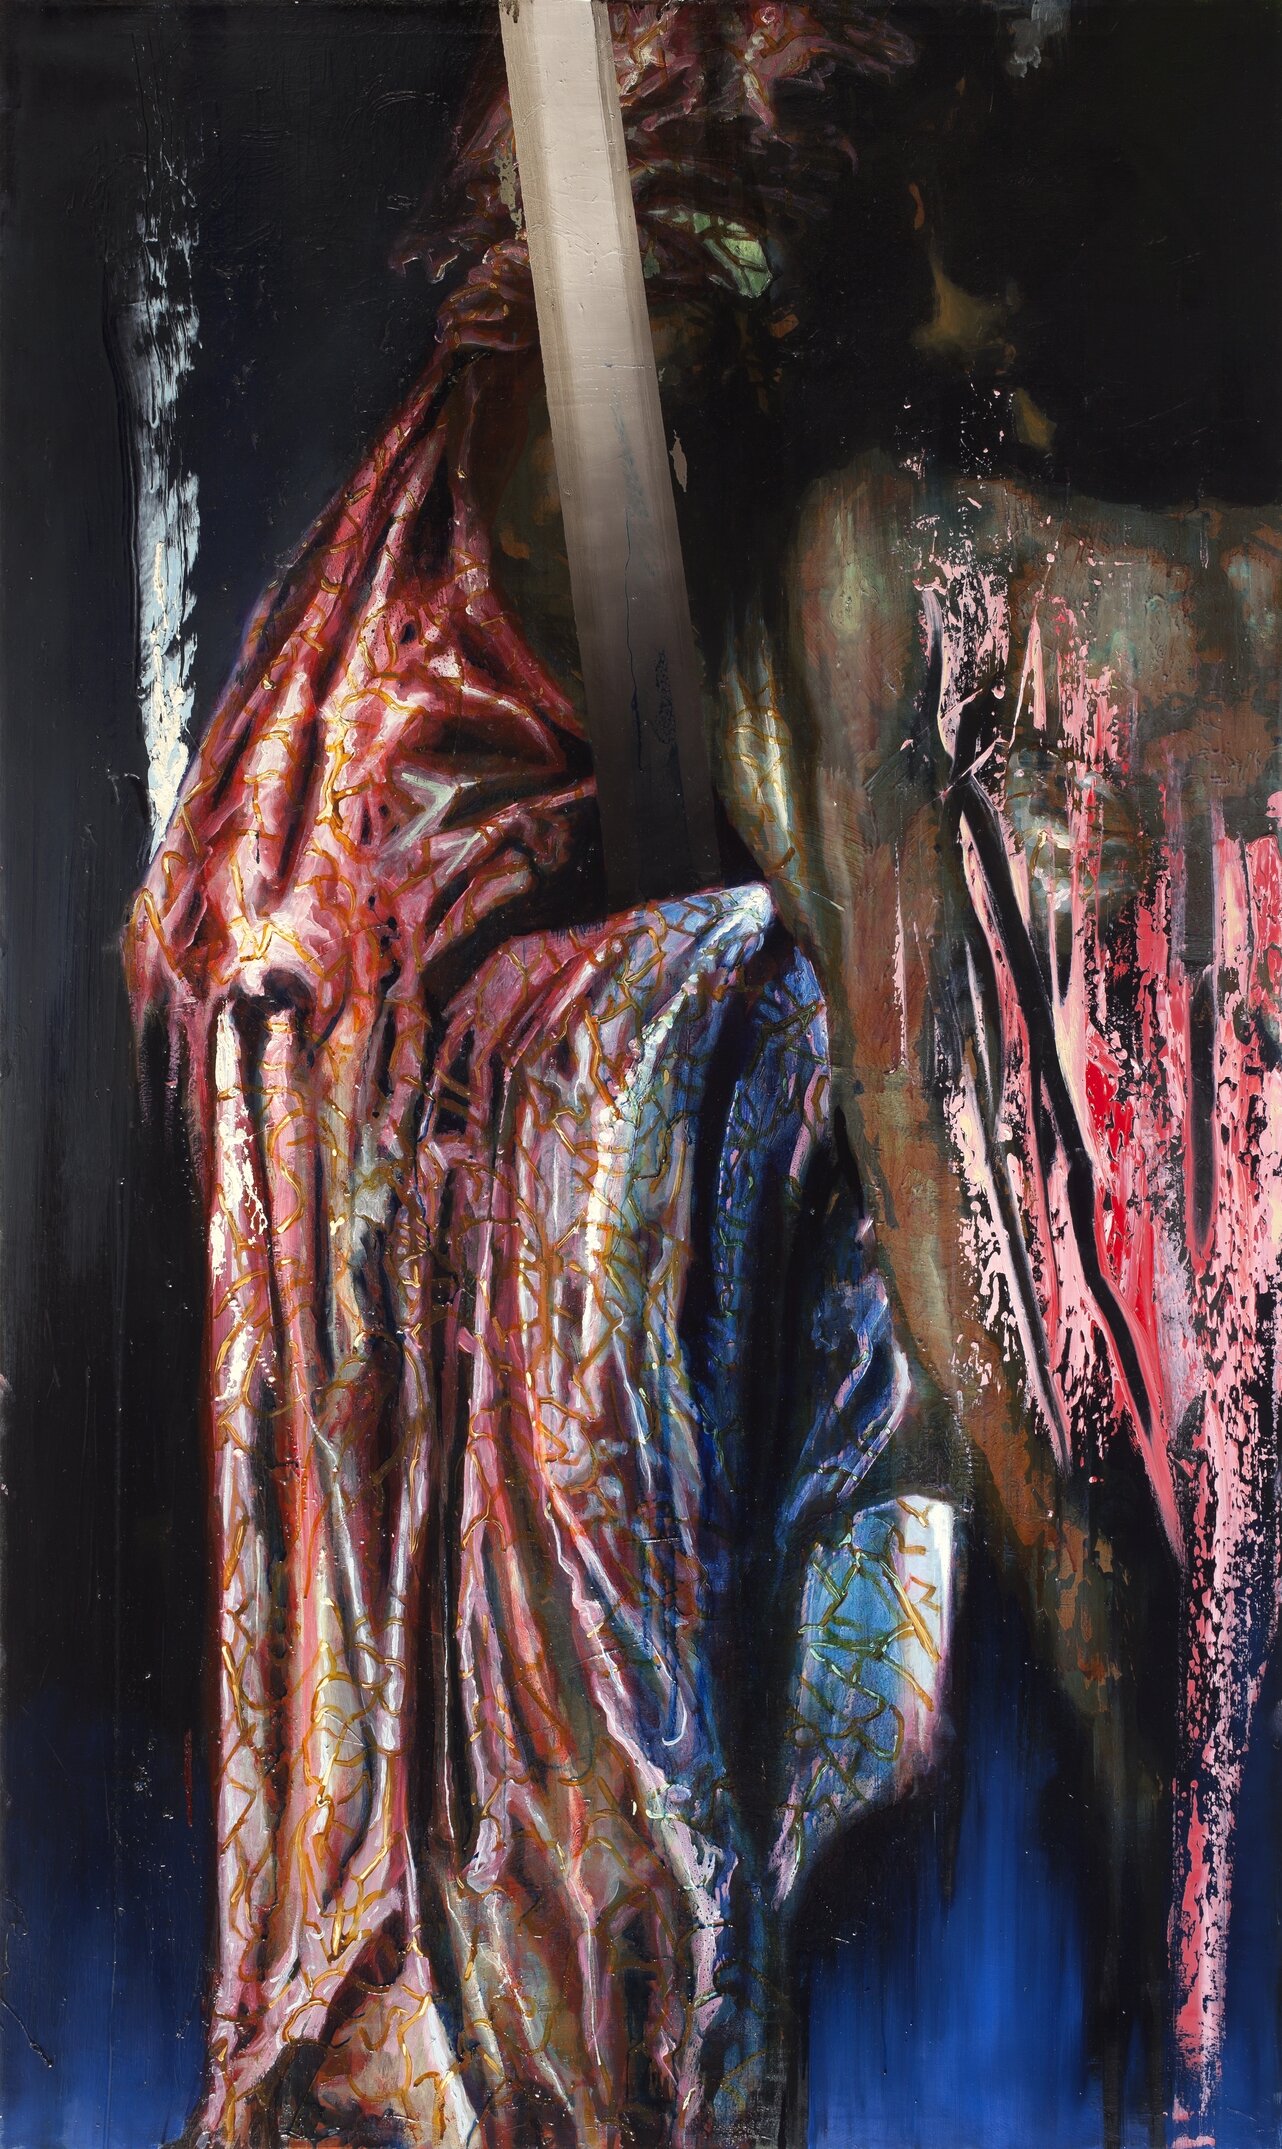 Deposition (2012), oil on canvas, 150x100 cm